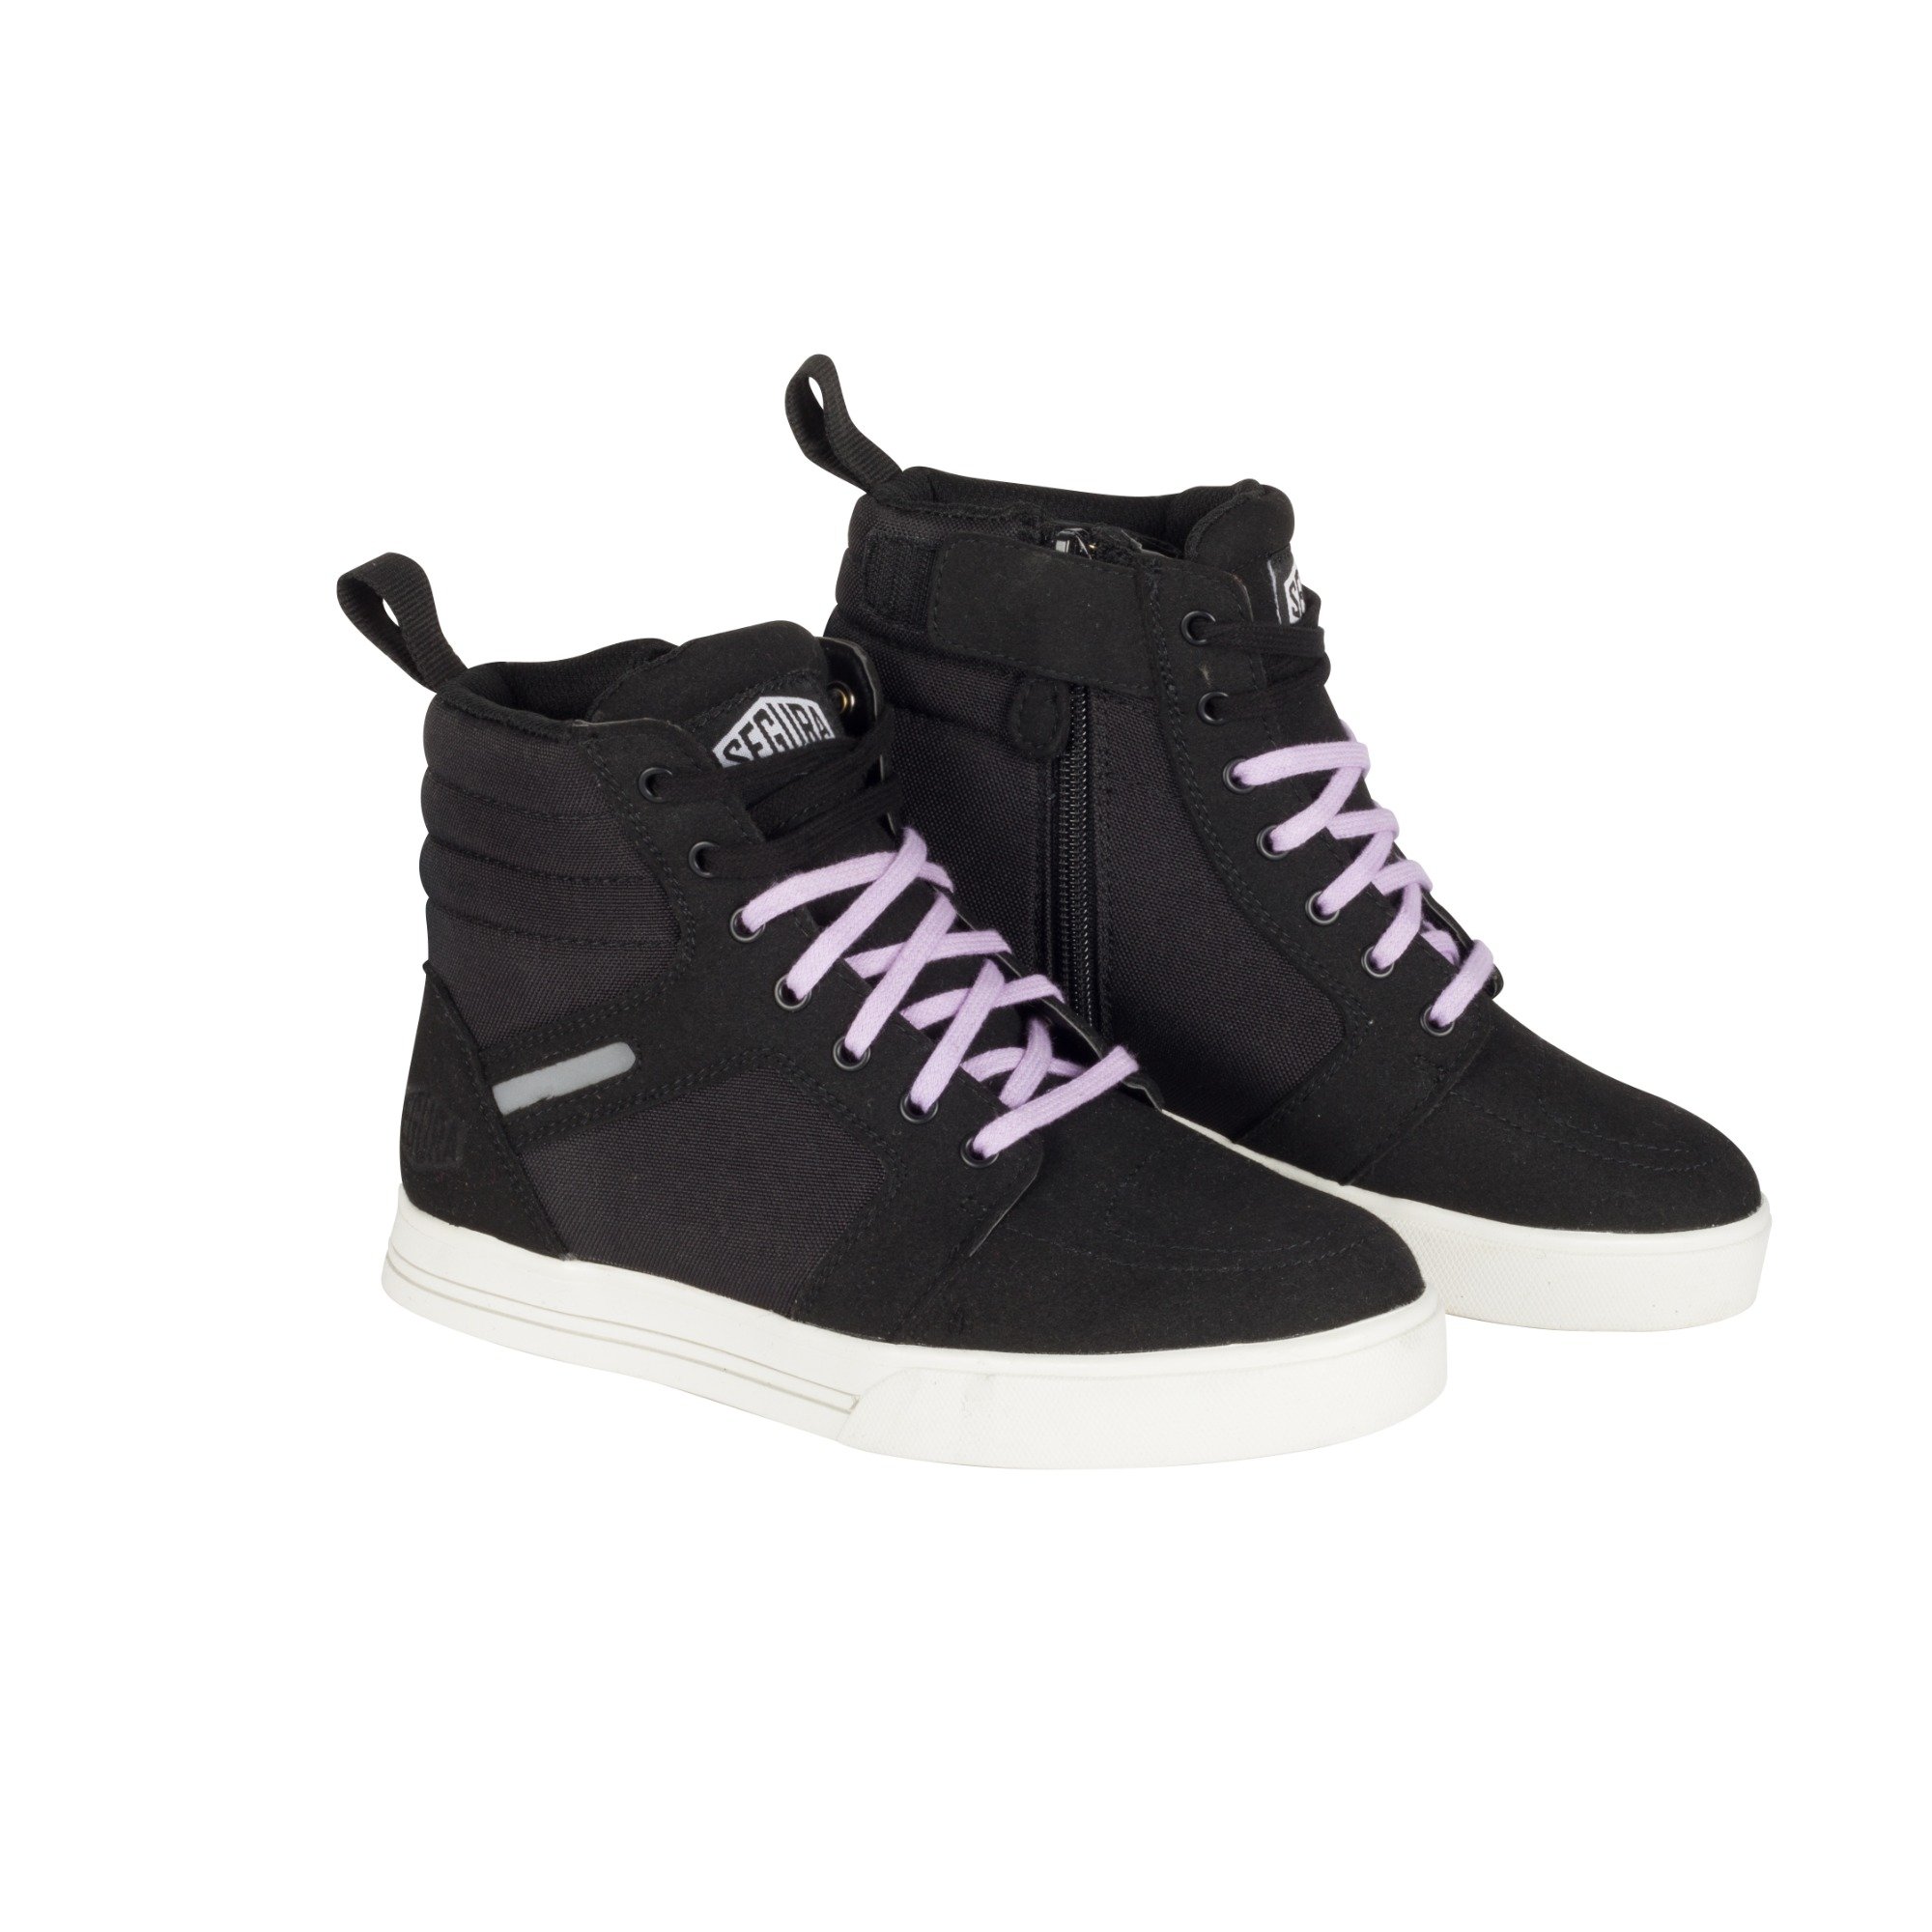 Image of Segura Lady Santana Sneakers Black Lilac Size 40 ID 3660815184189